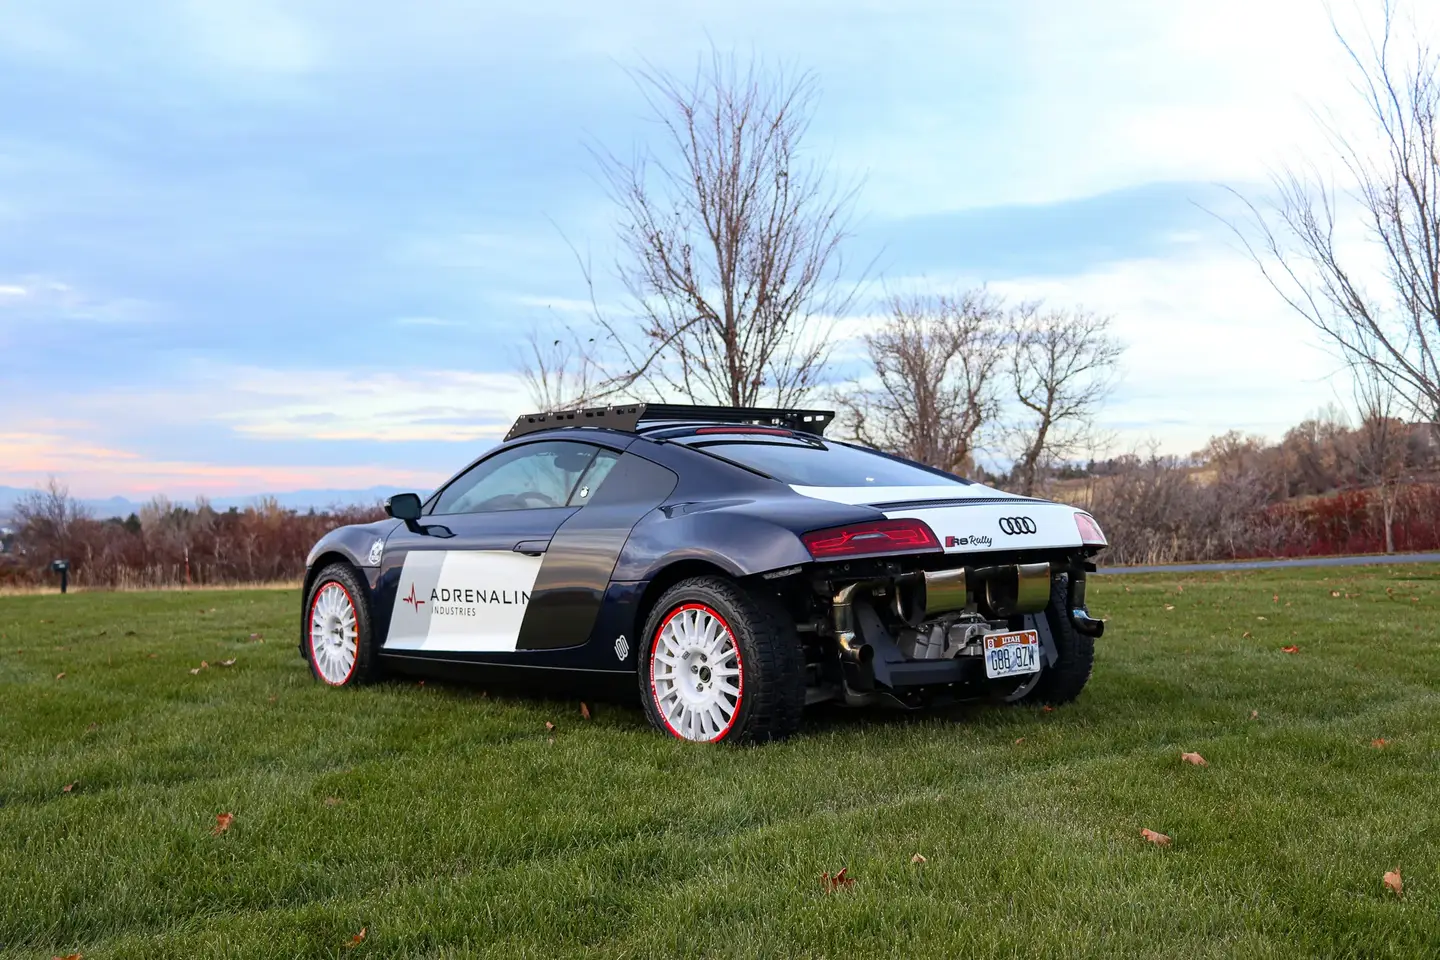 Safari Rally-inspired 2014 Audi R8